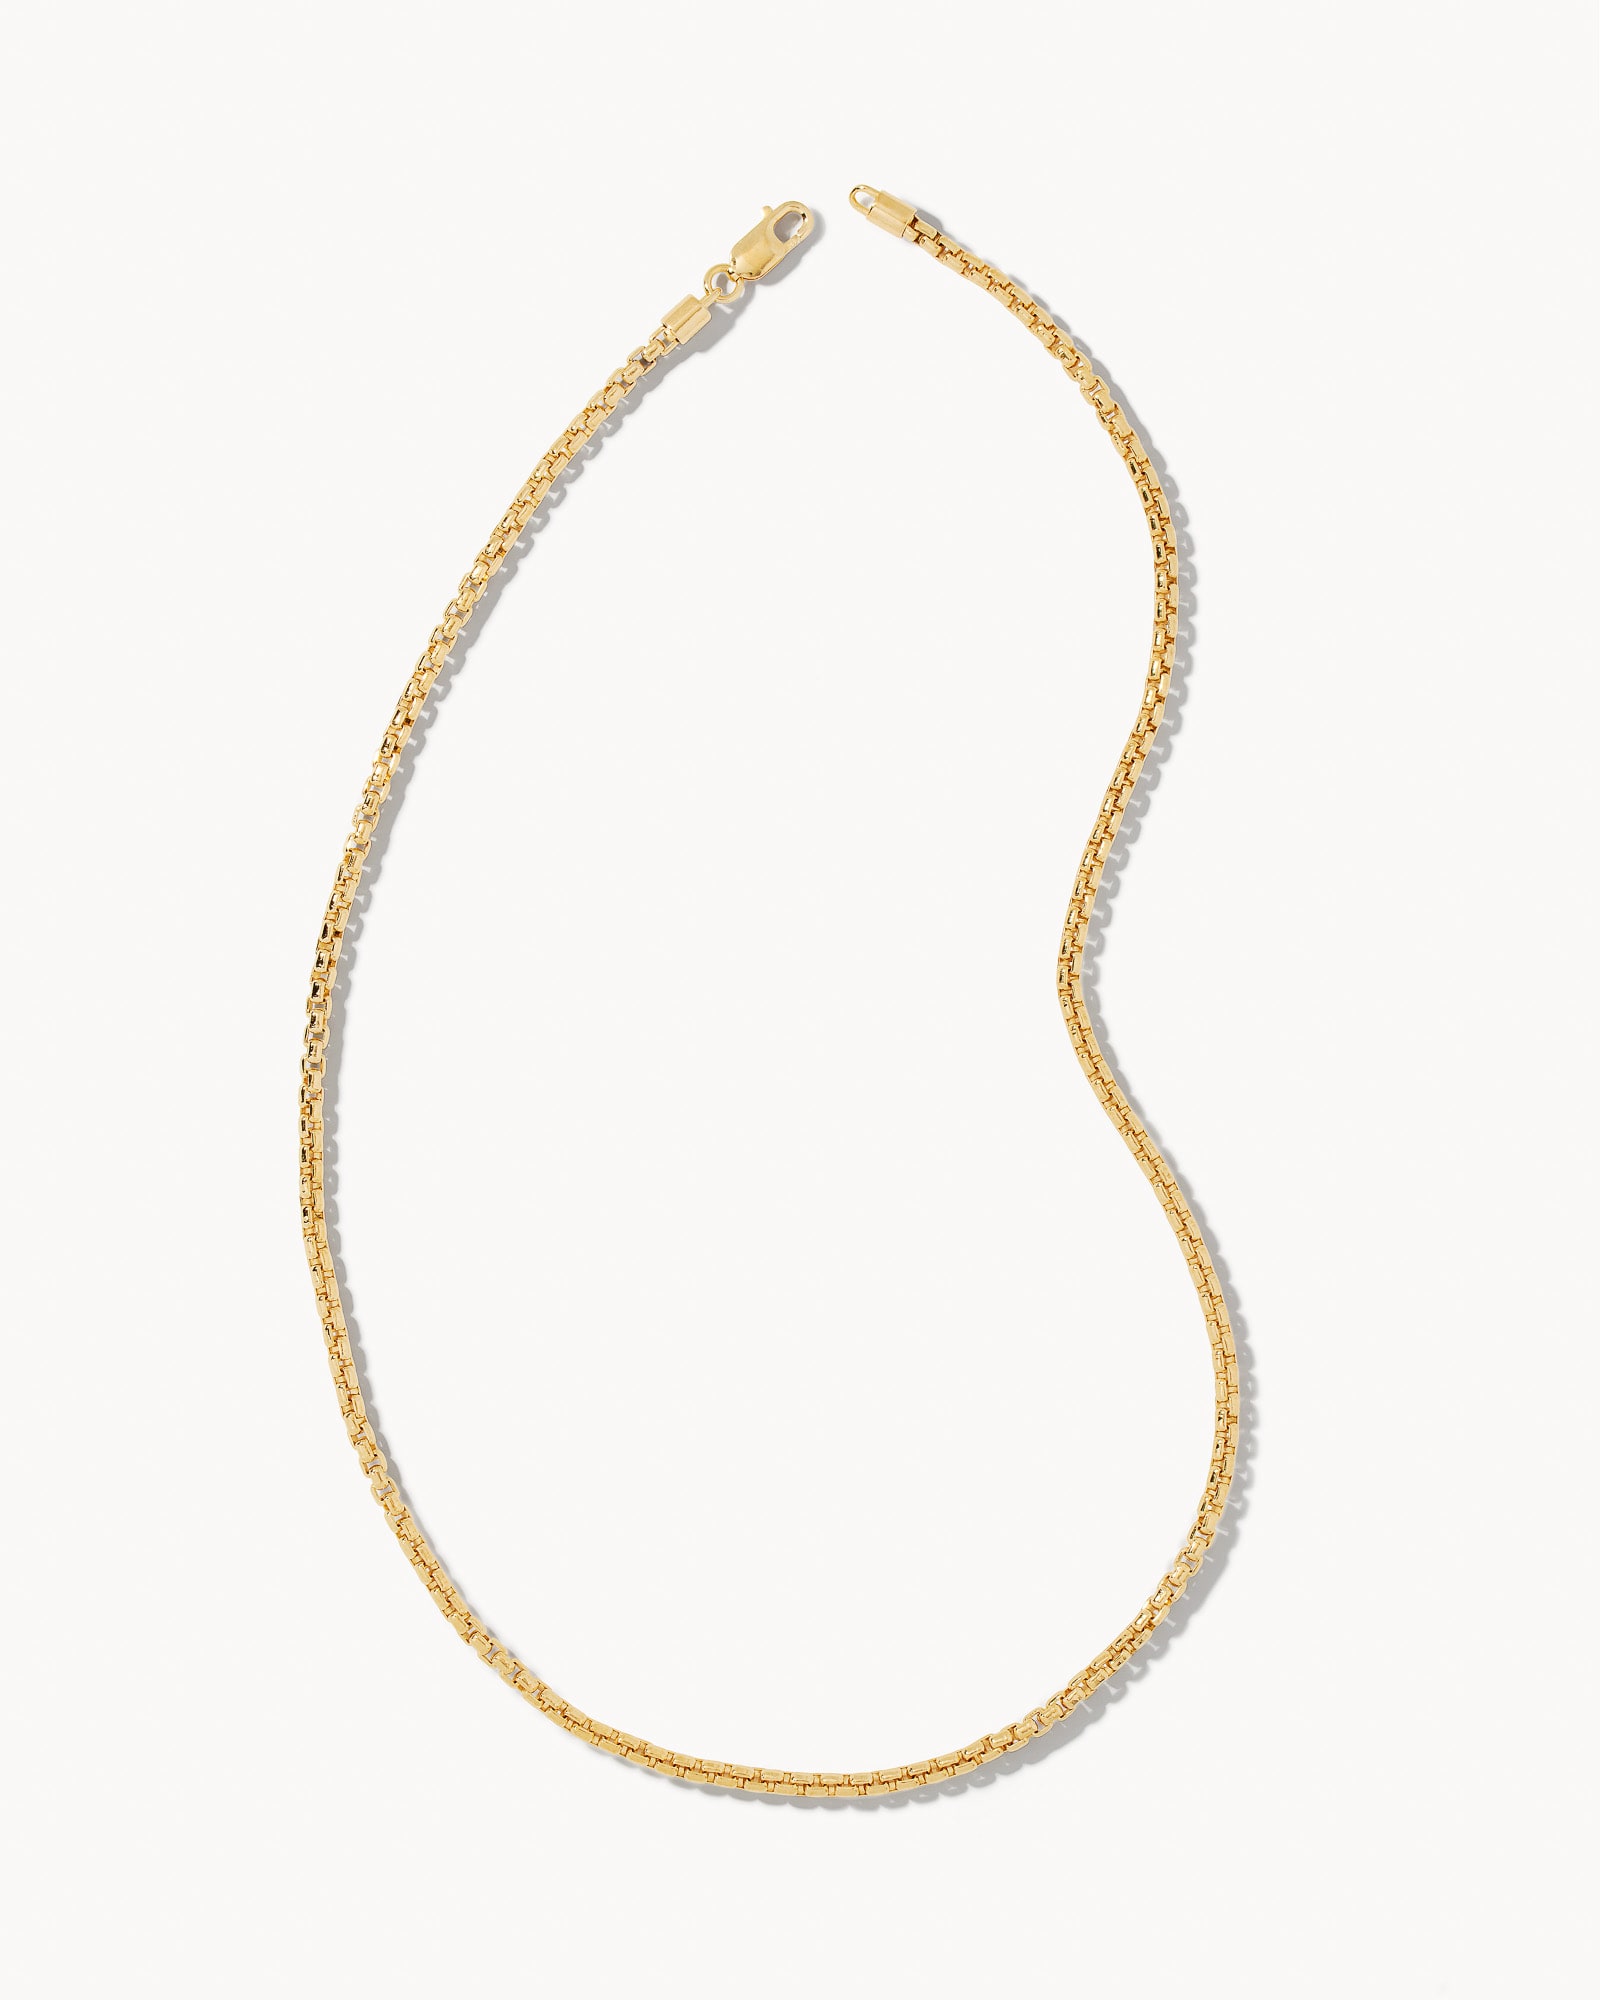 Beck Round Box Chain Necklace in 18k Oxidized Gold Vermeil